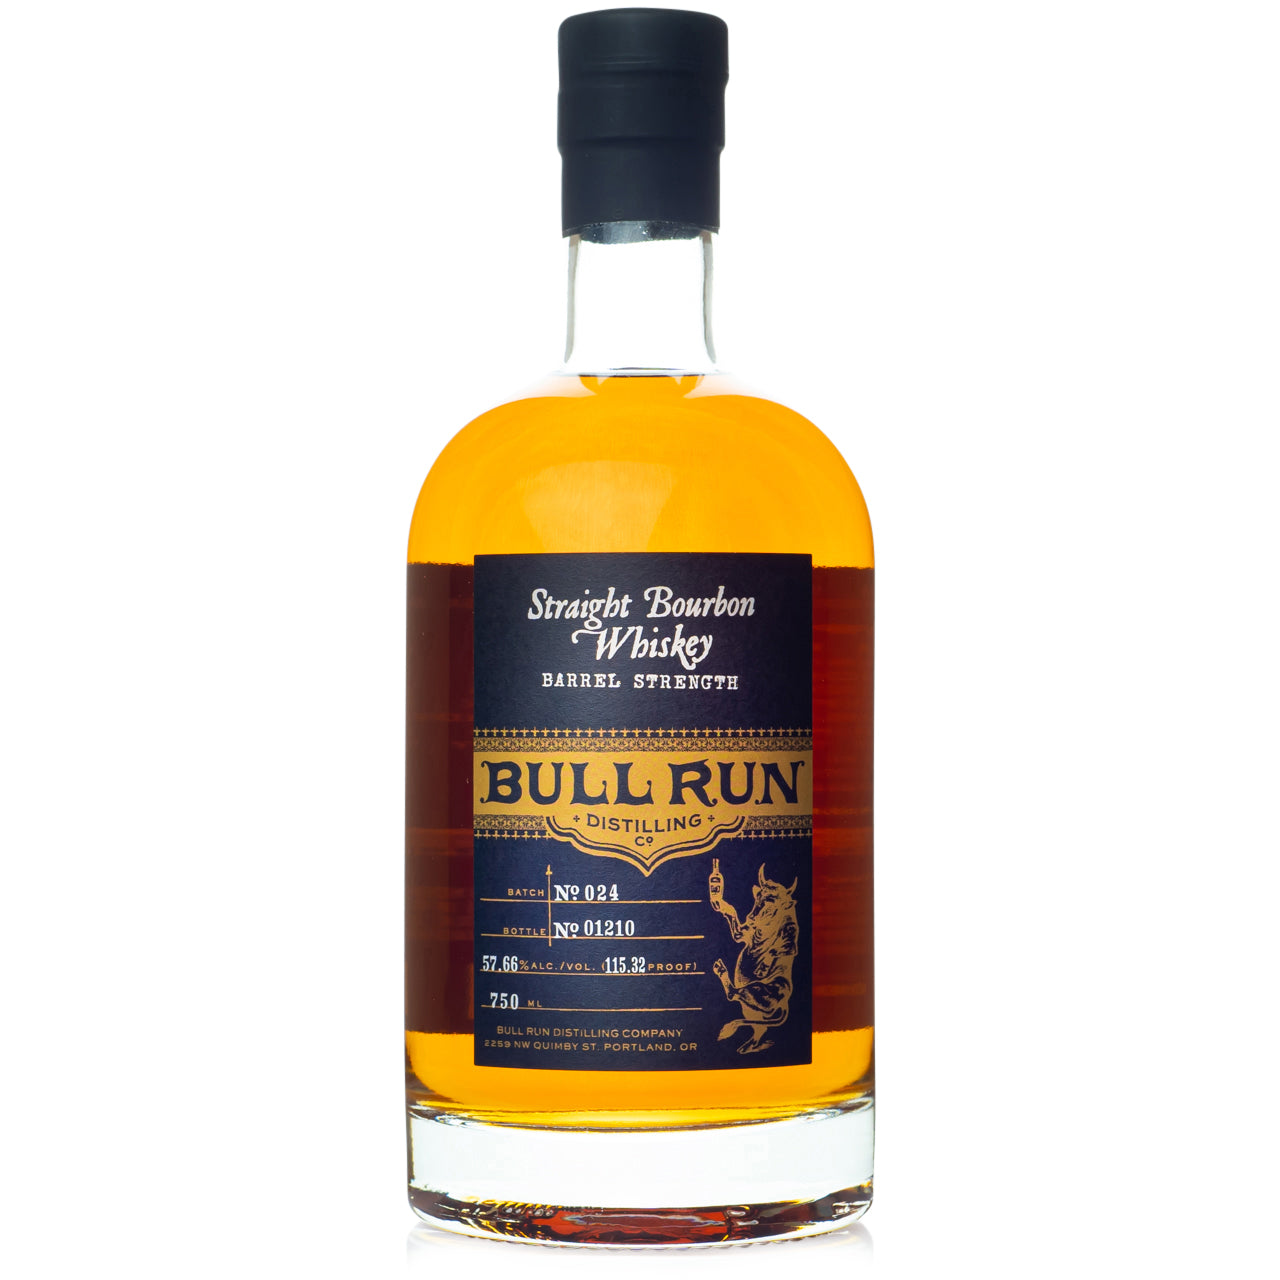 Bull Run Barrel Strength Whiskey